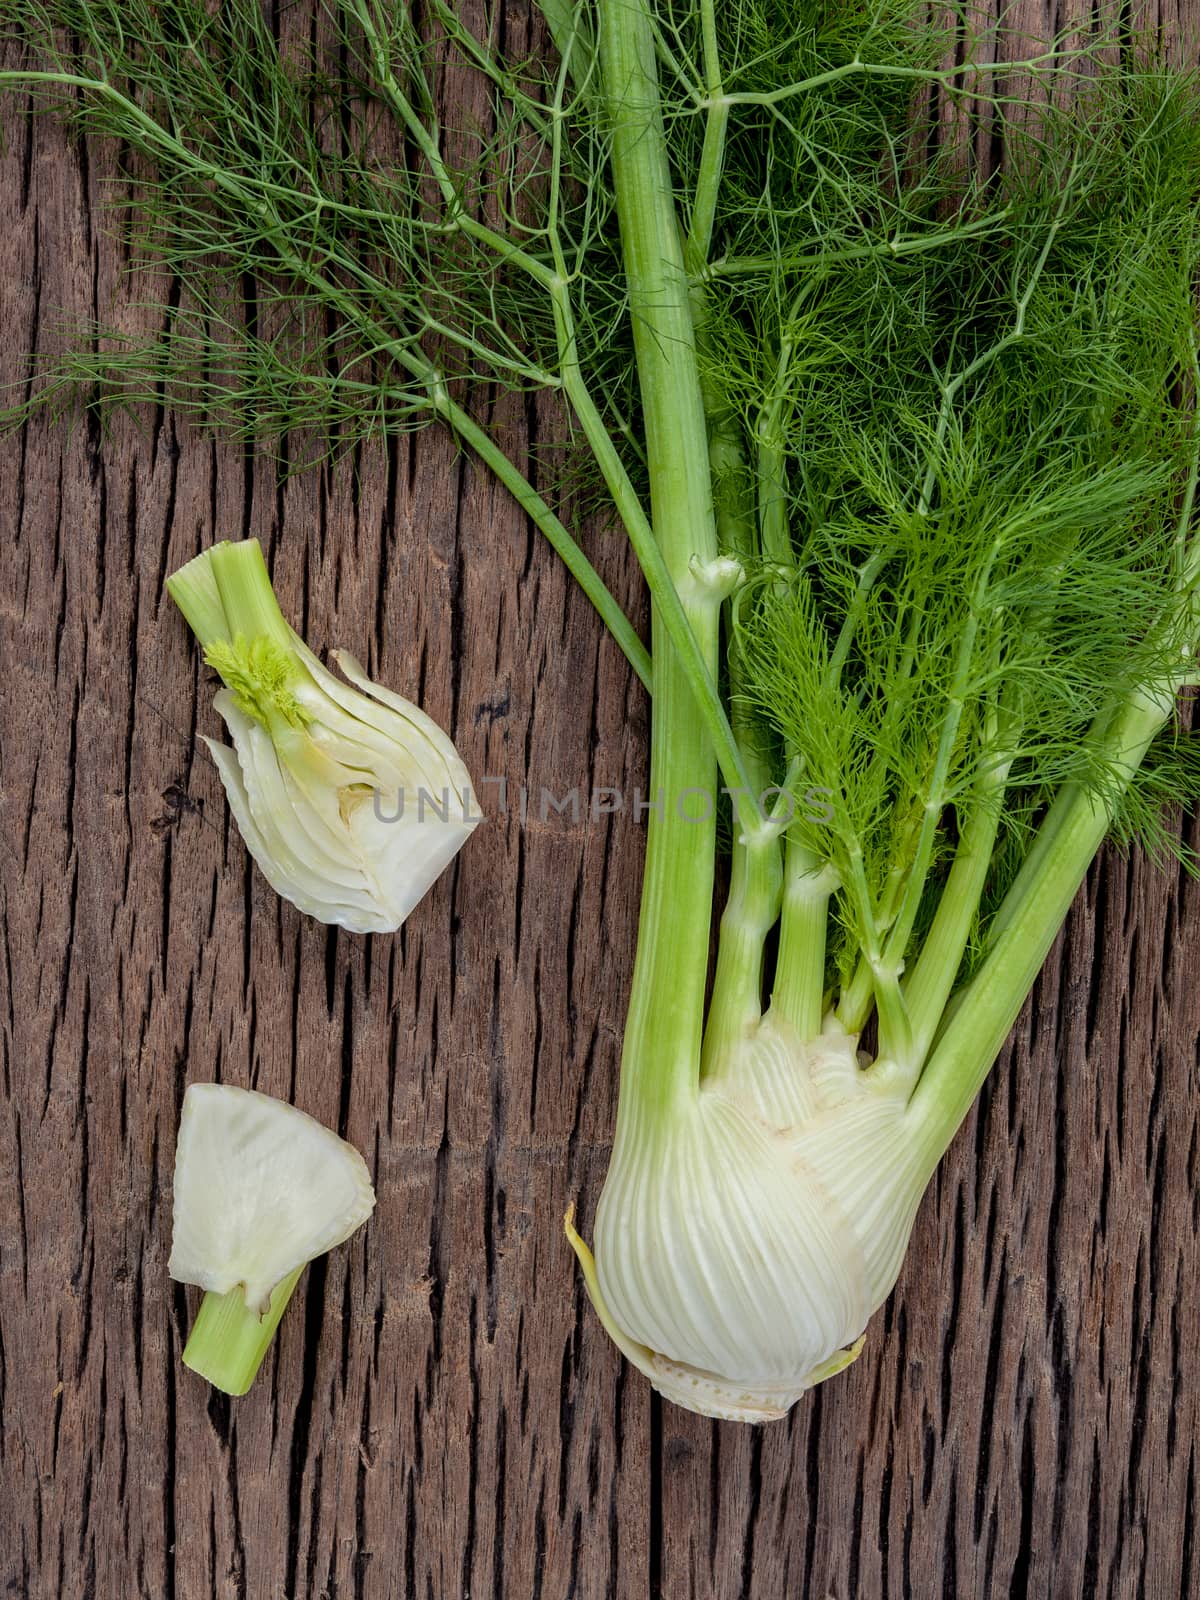 Fresh organic fennel bulbs for culinary purposes on wooden backg by kerdkanno